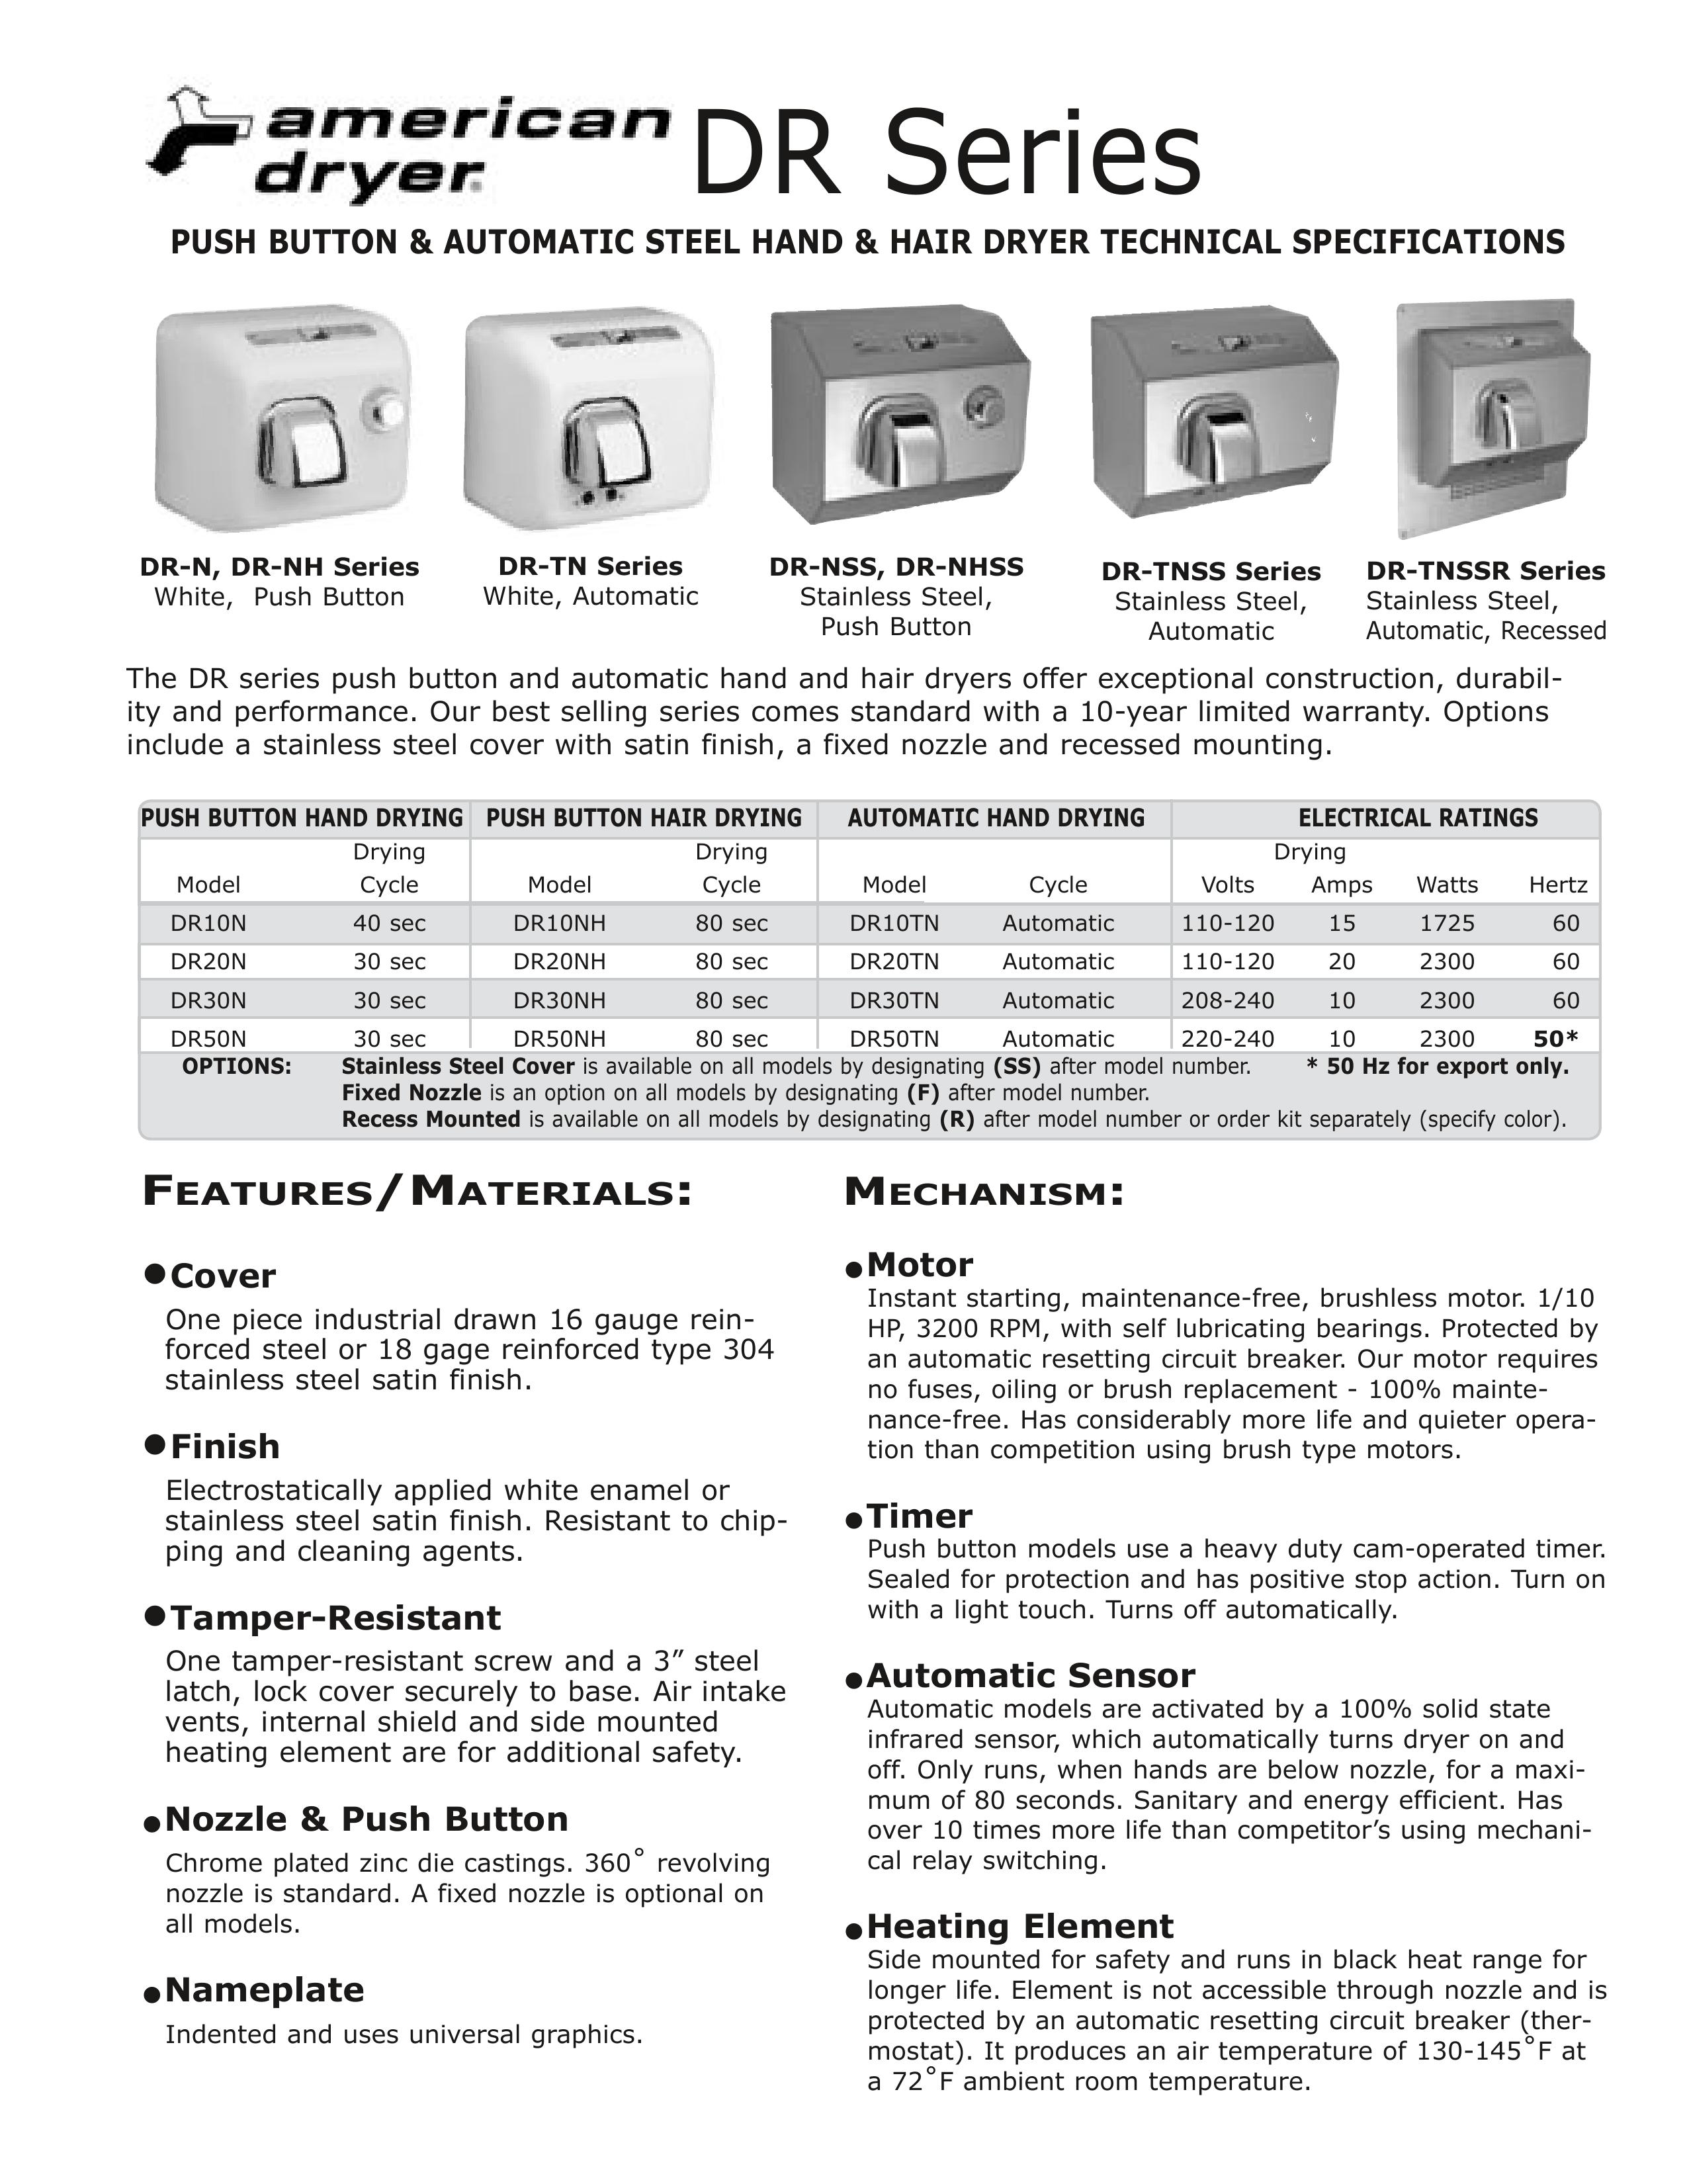 American Dryer DR-TNSSR Hair Dryer User Manual